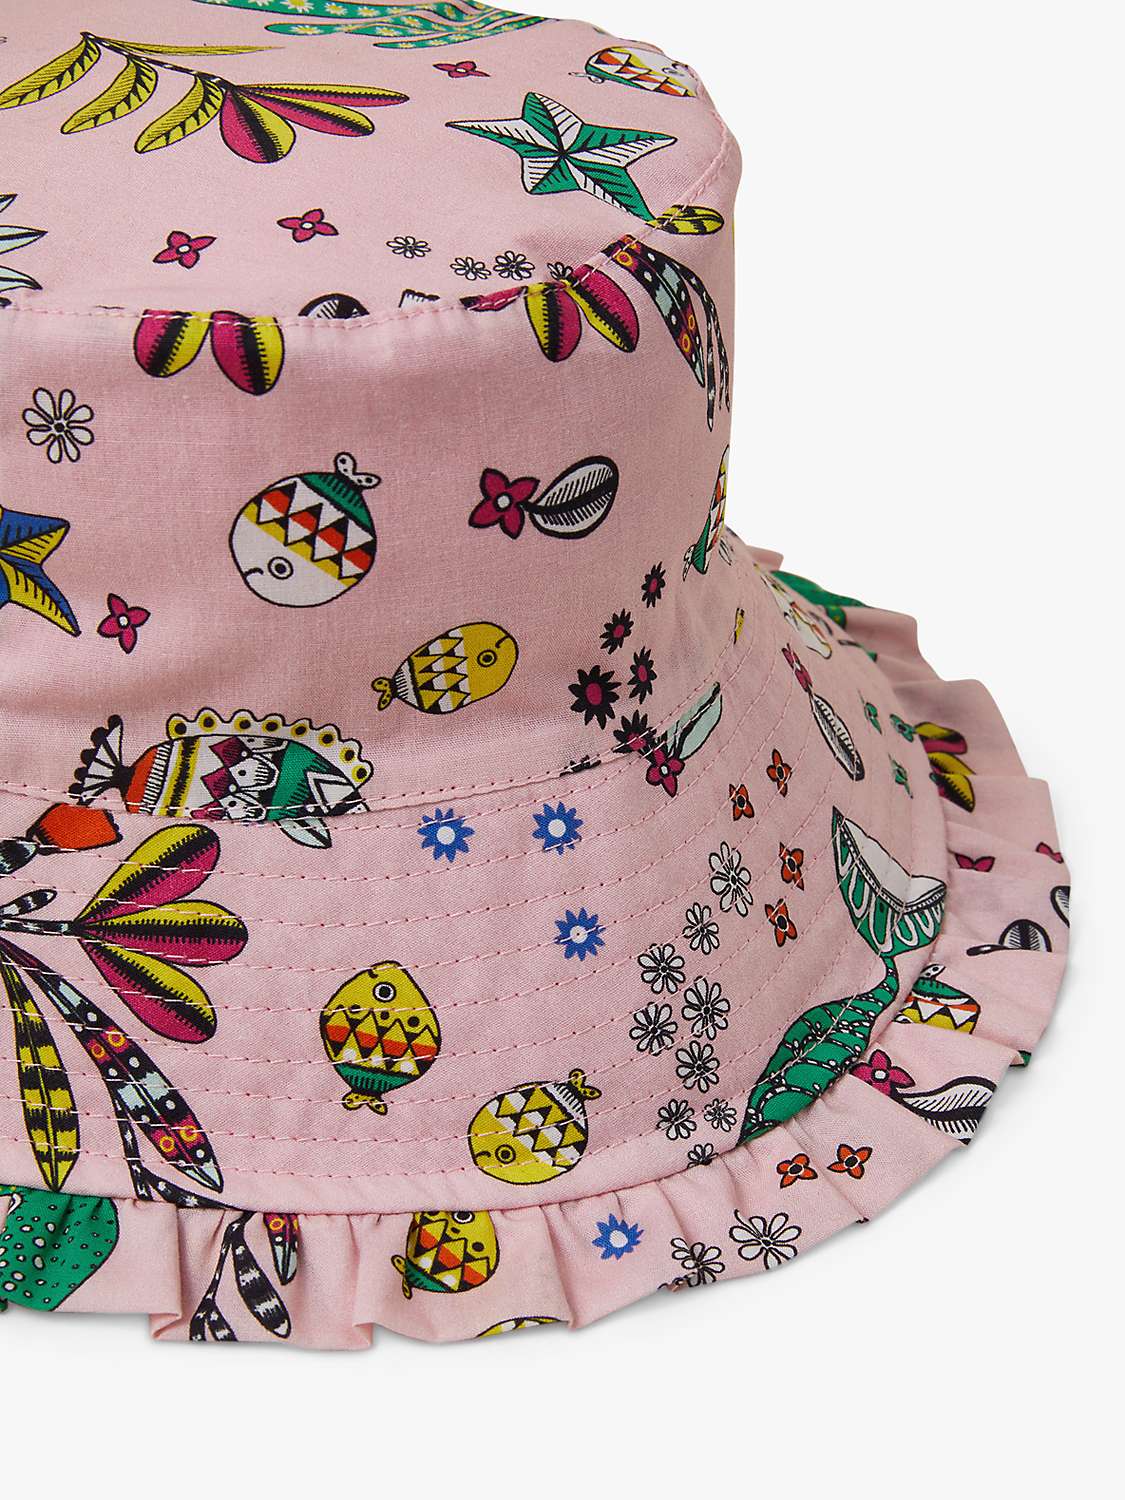 Buy Angels by Accessorize Kids' Mermaid Print Bucket Hat, Pink/Multi Online at johnlewis.com